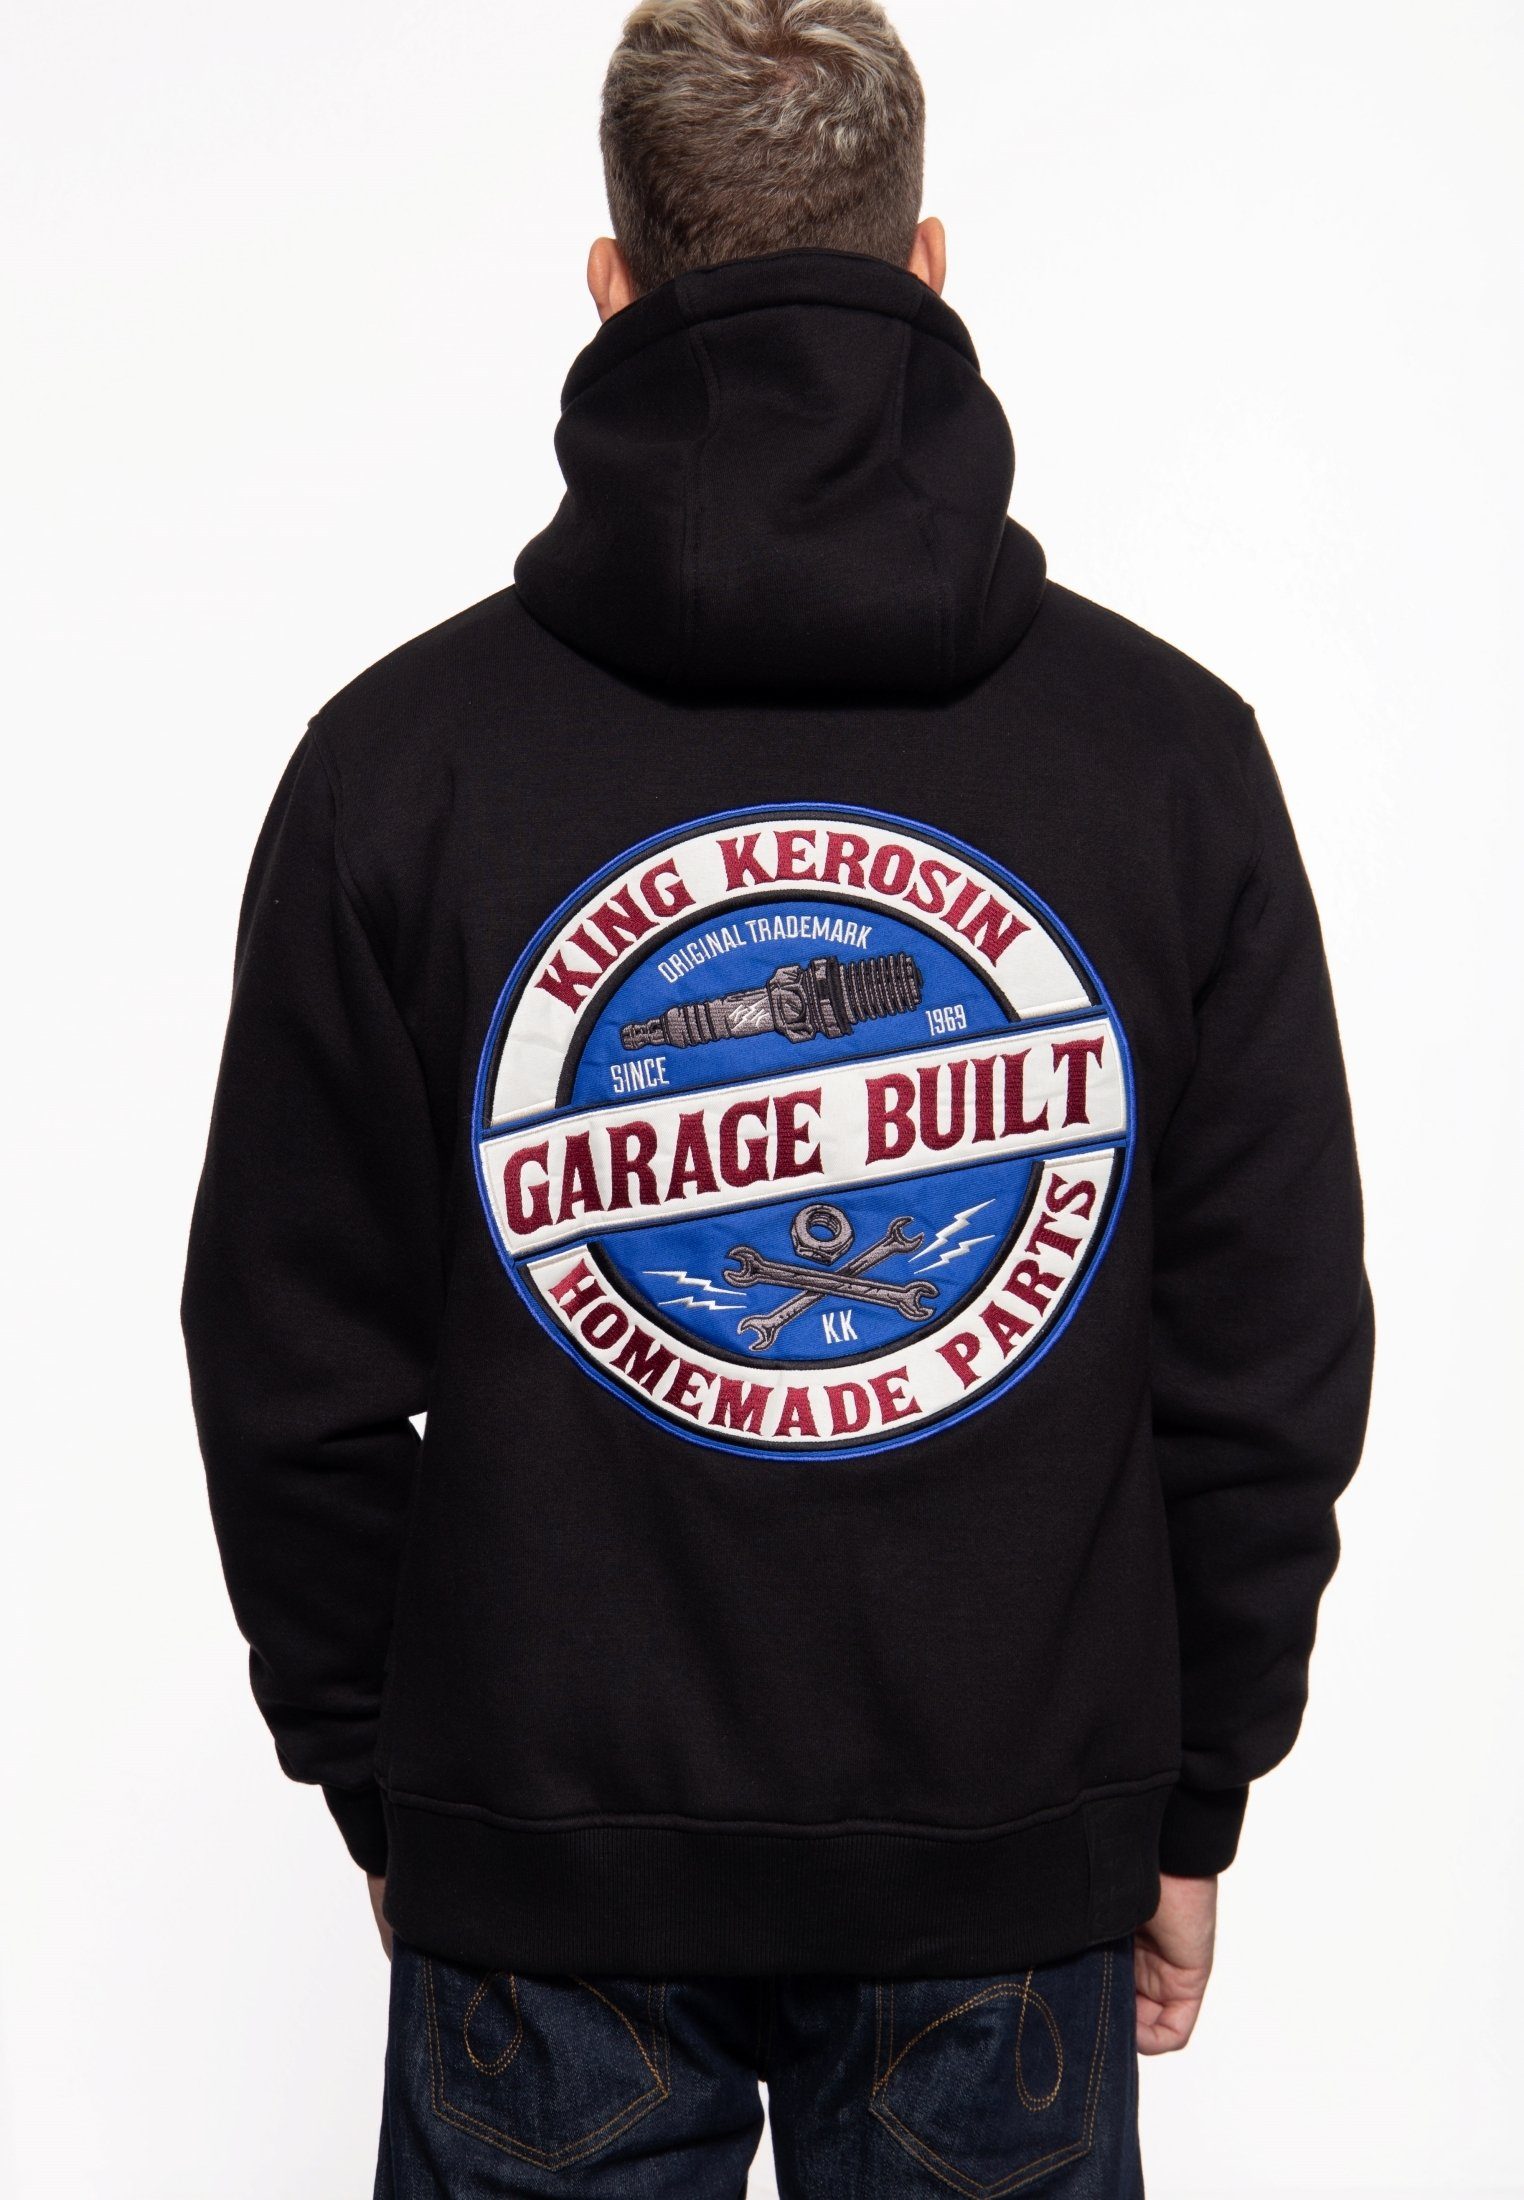 Built Garage Stickereien Kapuzensweatjacke mit KingKerosin